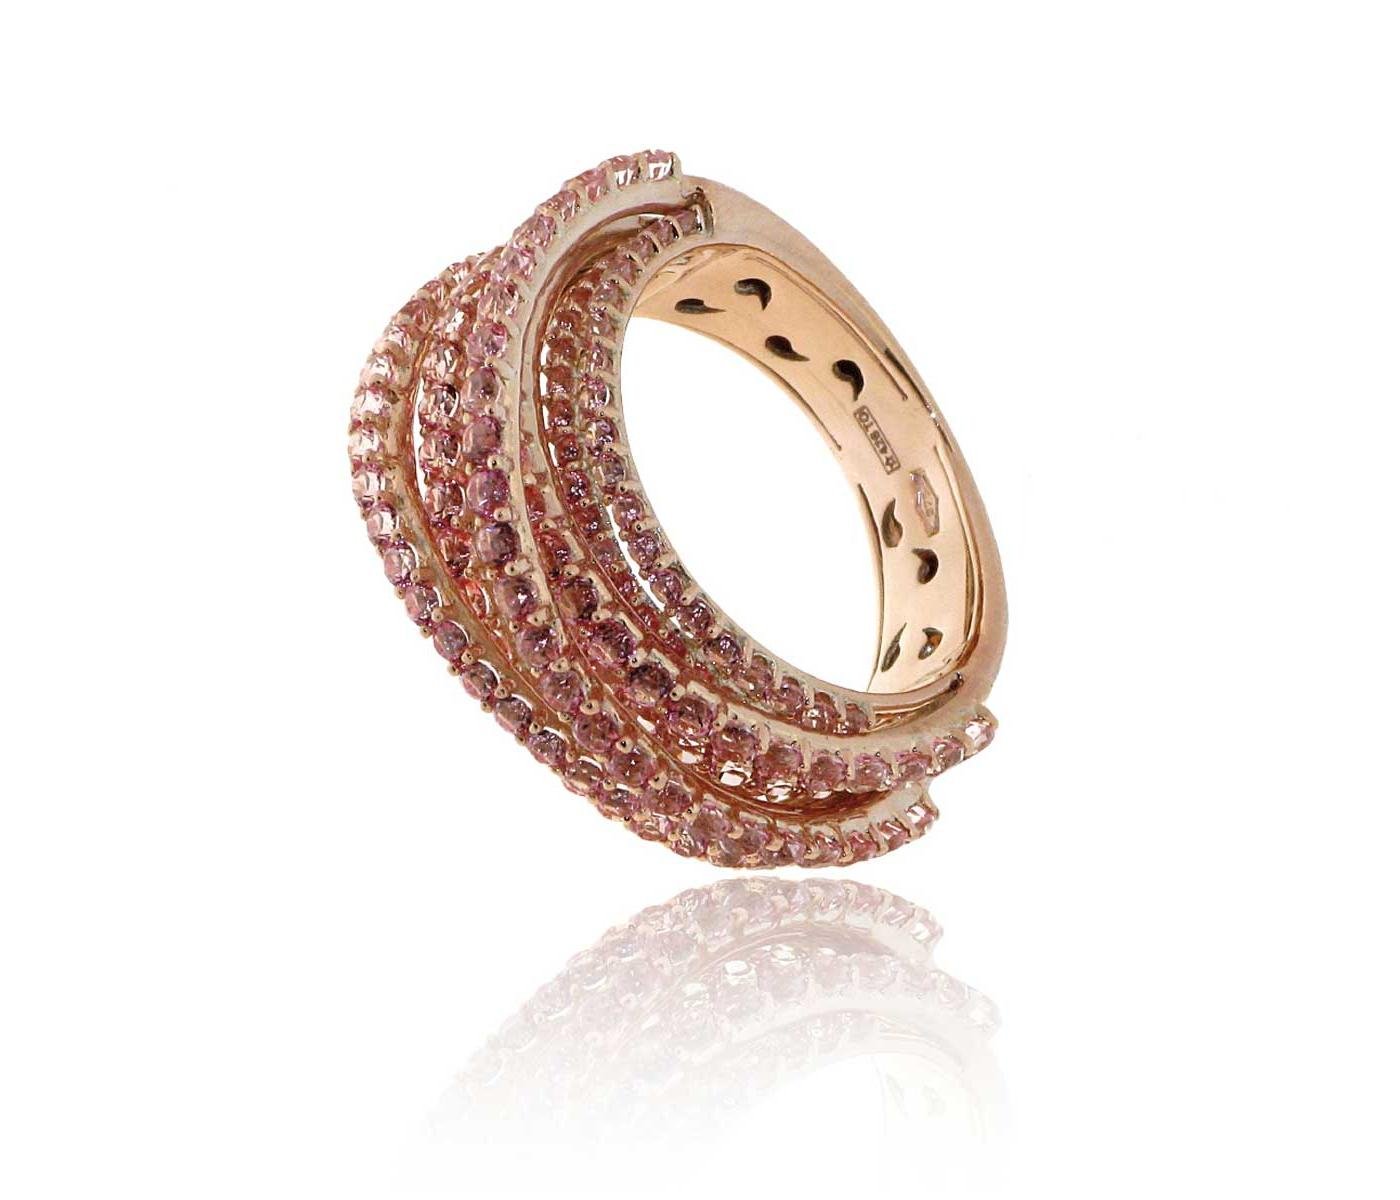 Ring by Roberto Demeglio for Swarovski Gems